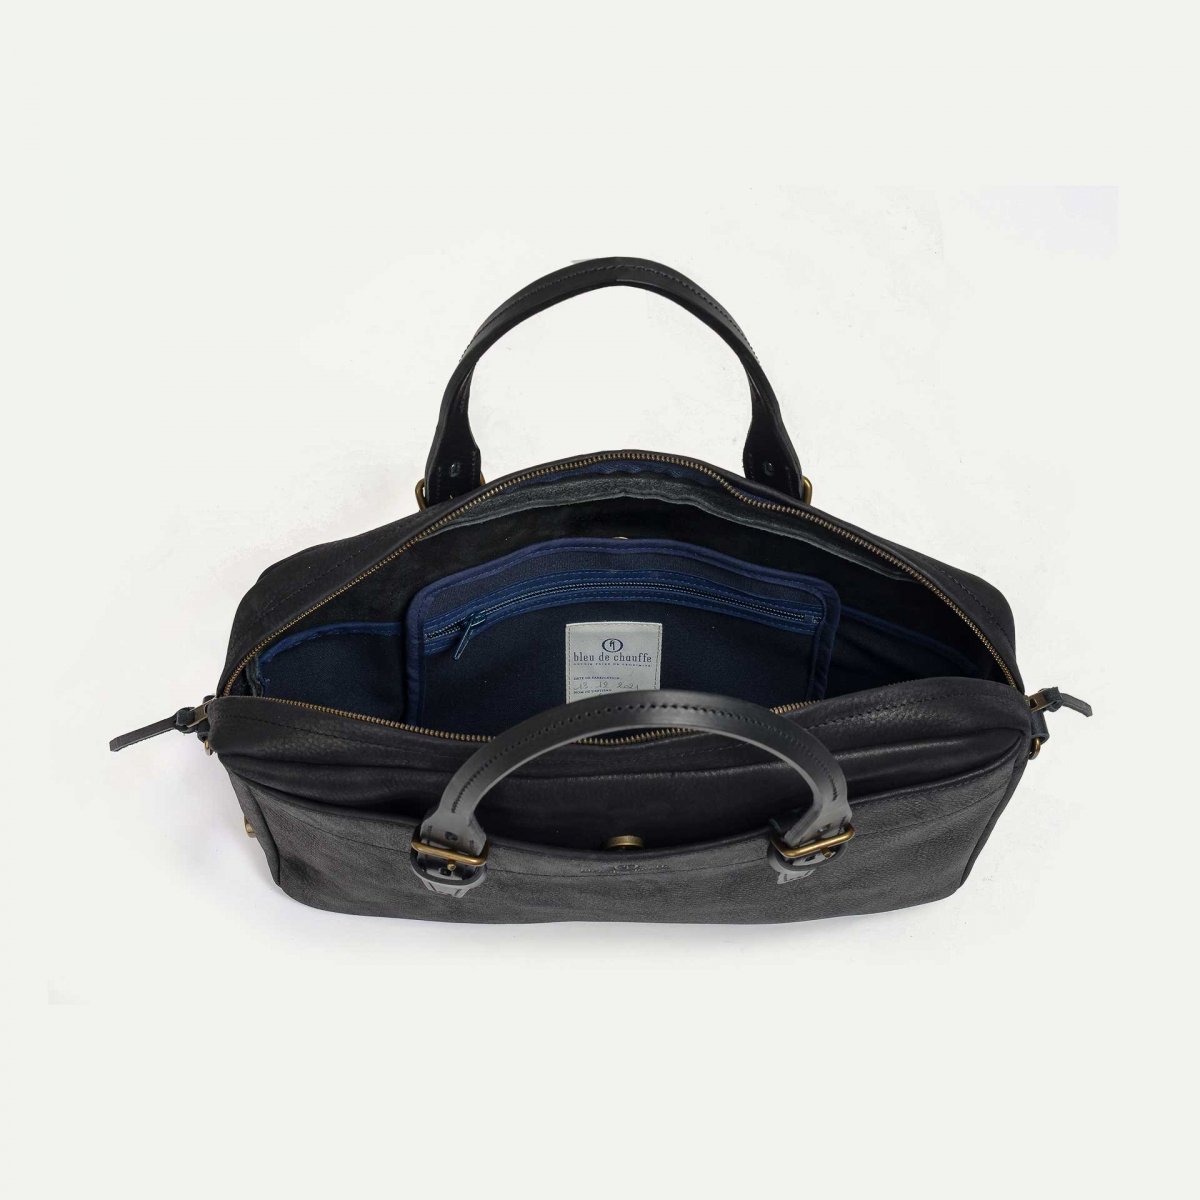 Folder Business bag - Charcoal black / Waxed Leather (image n°4)